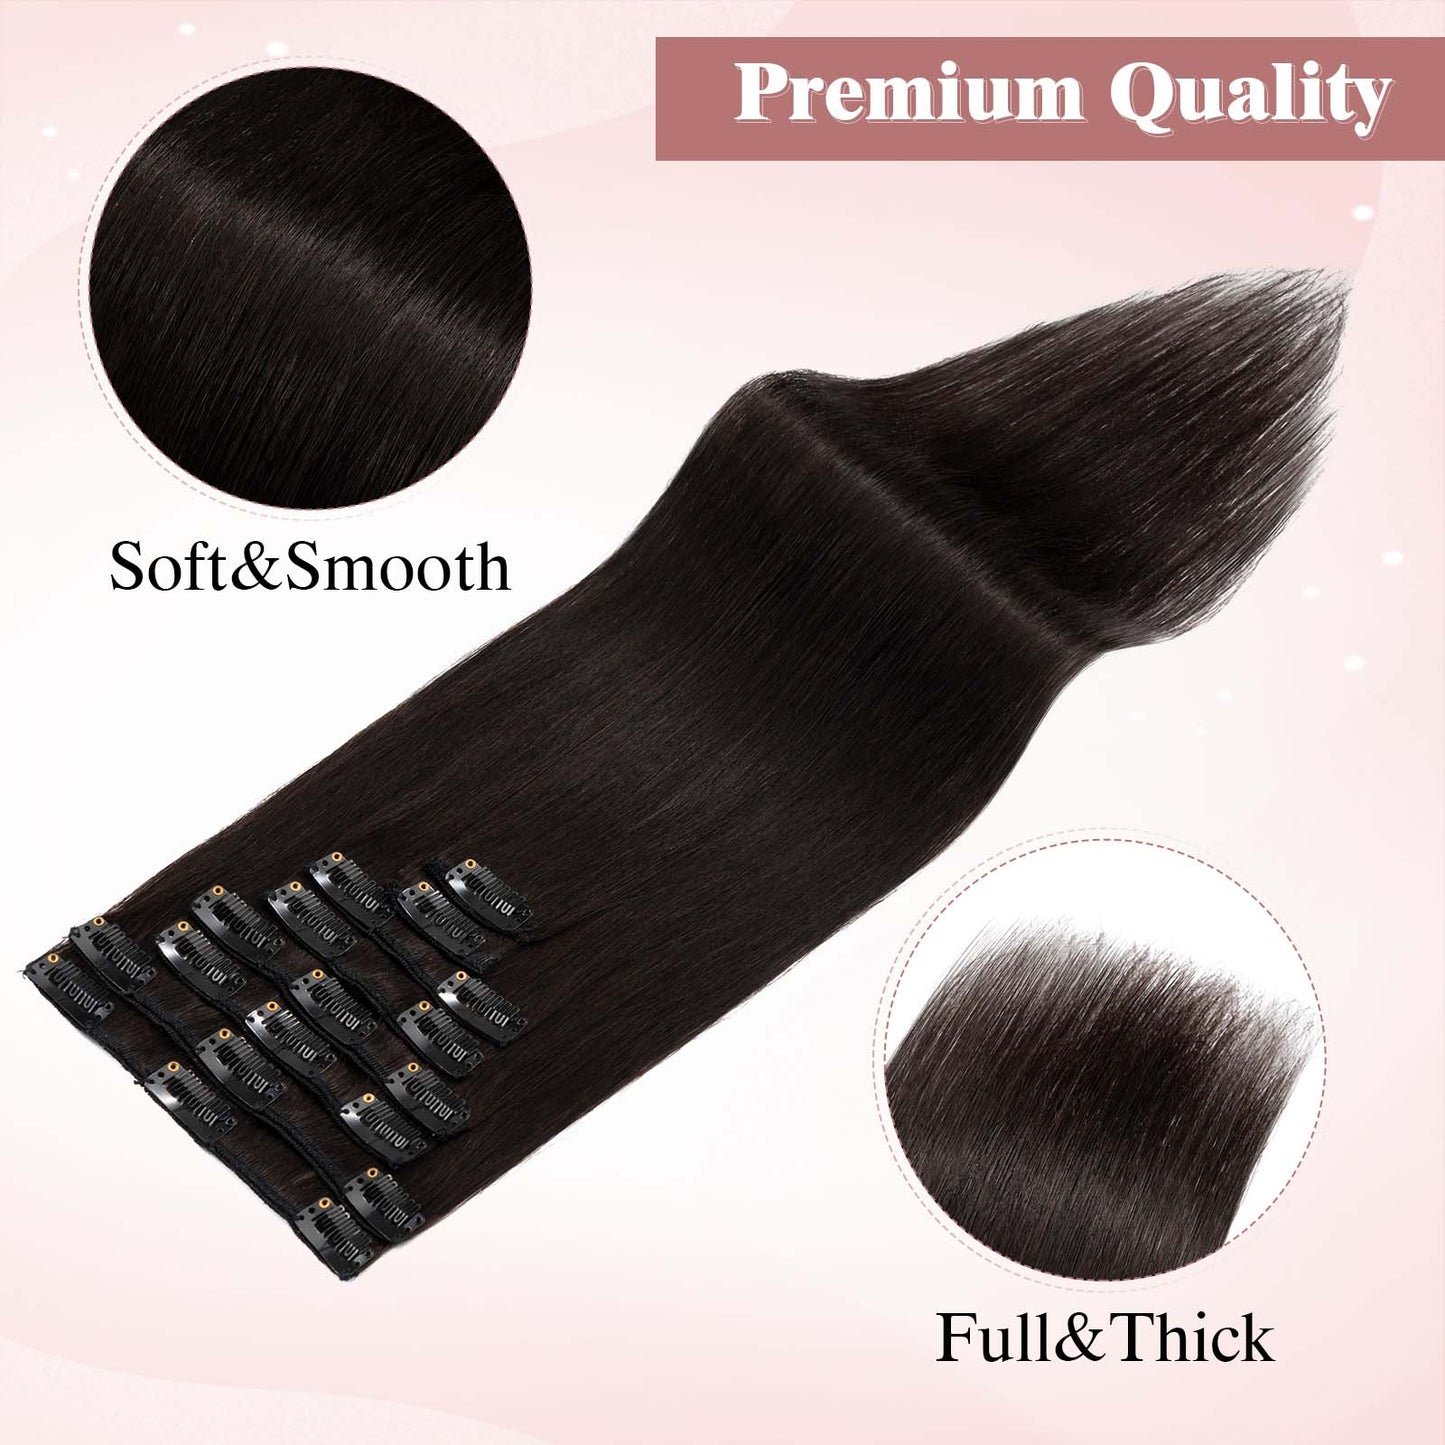 SEGOHAIR Clip In Hair Extensions Real Human Hair Light Weight Natural Black segohair.com